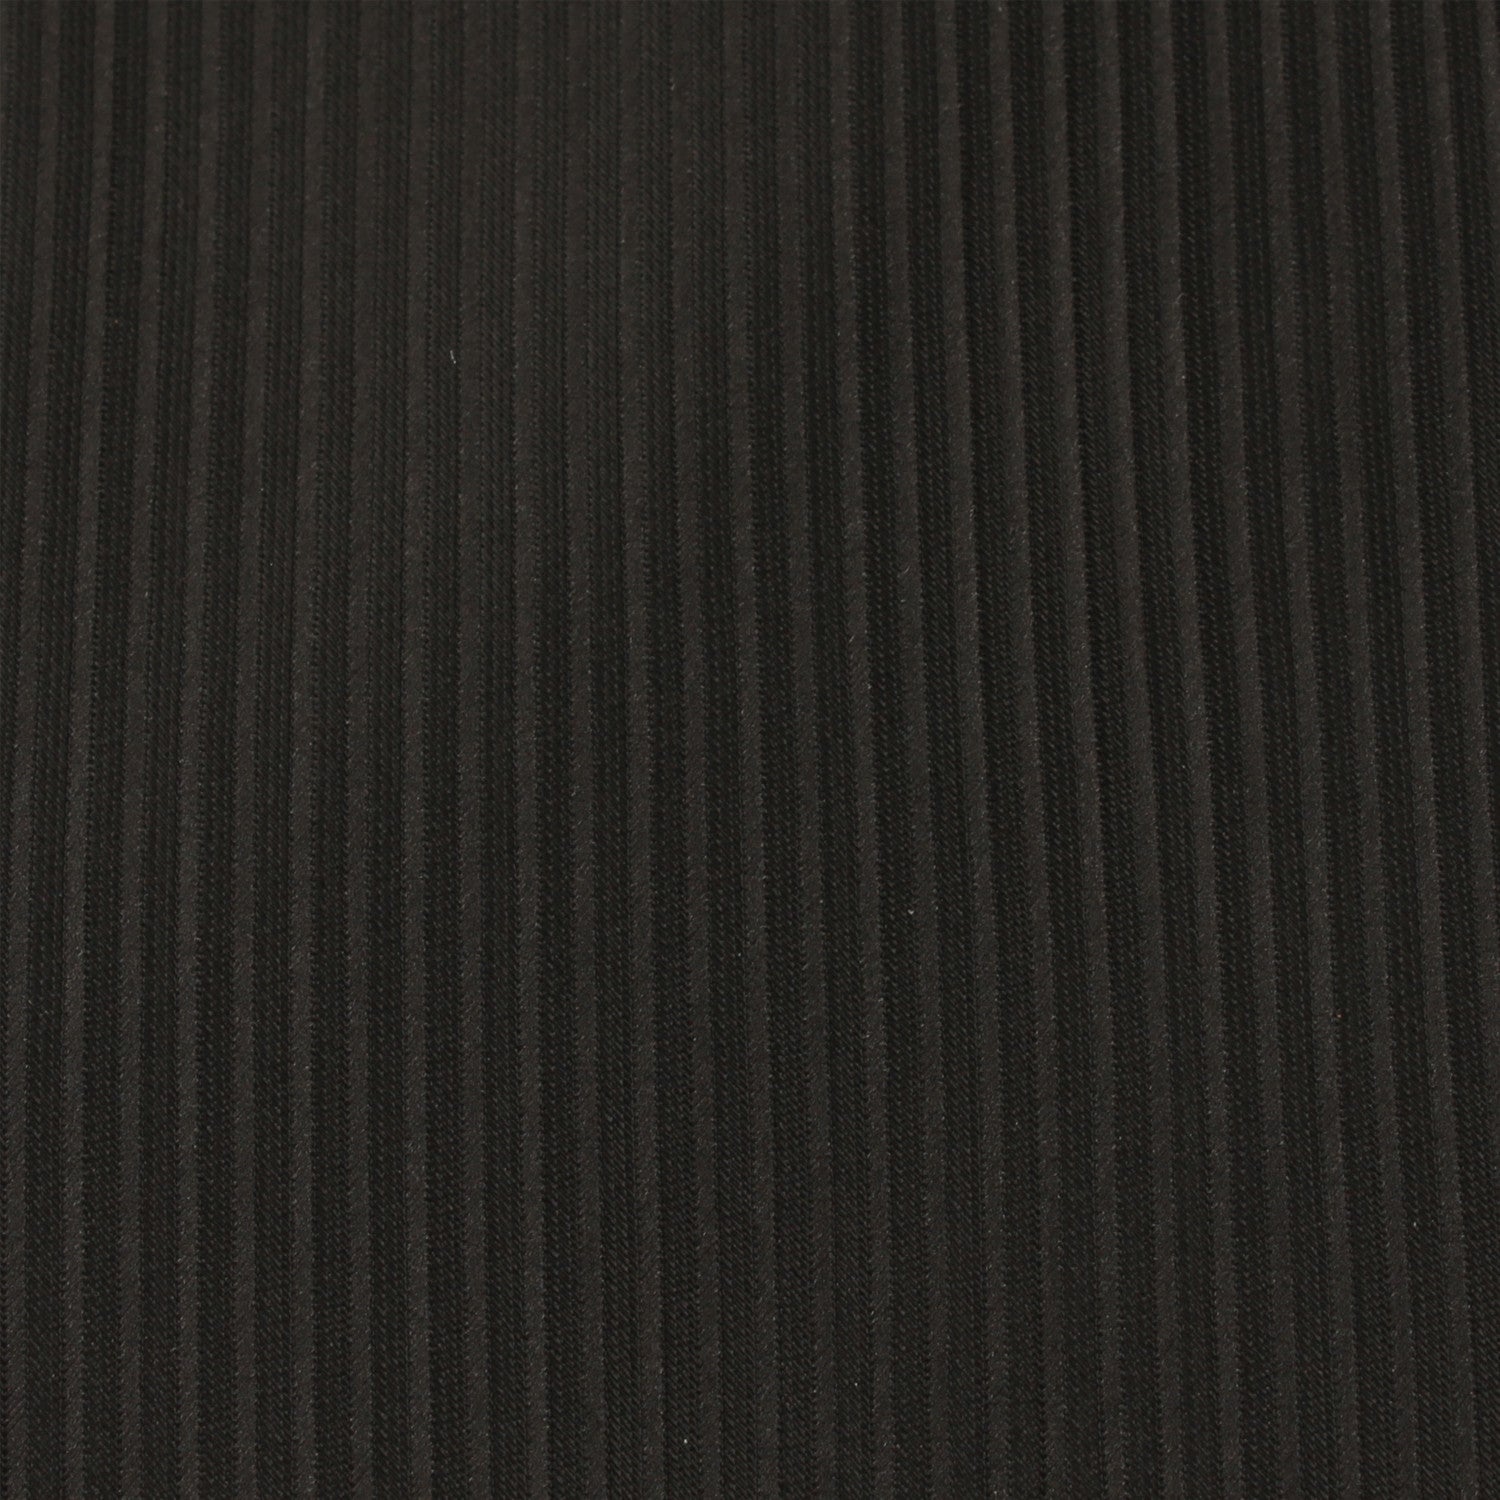 Jet Black Stripes Necktie Fabric